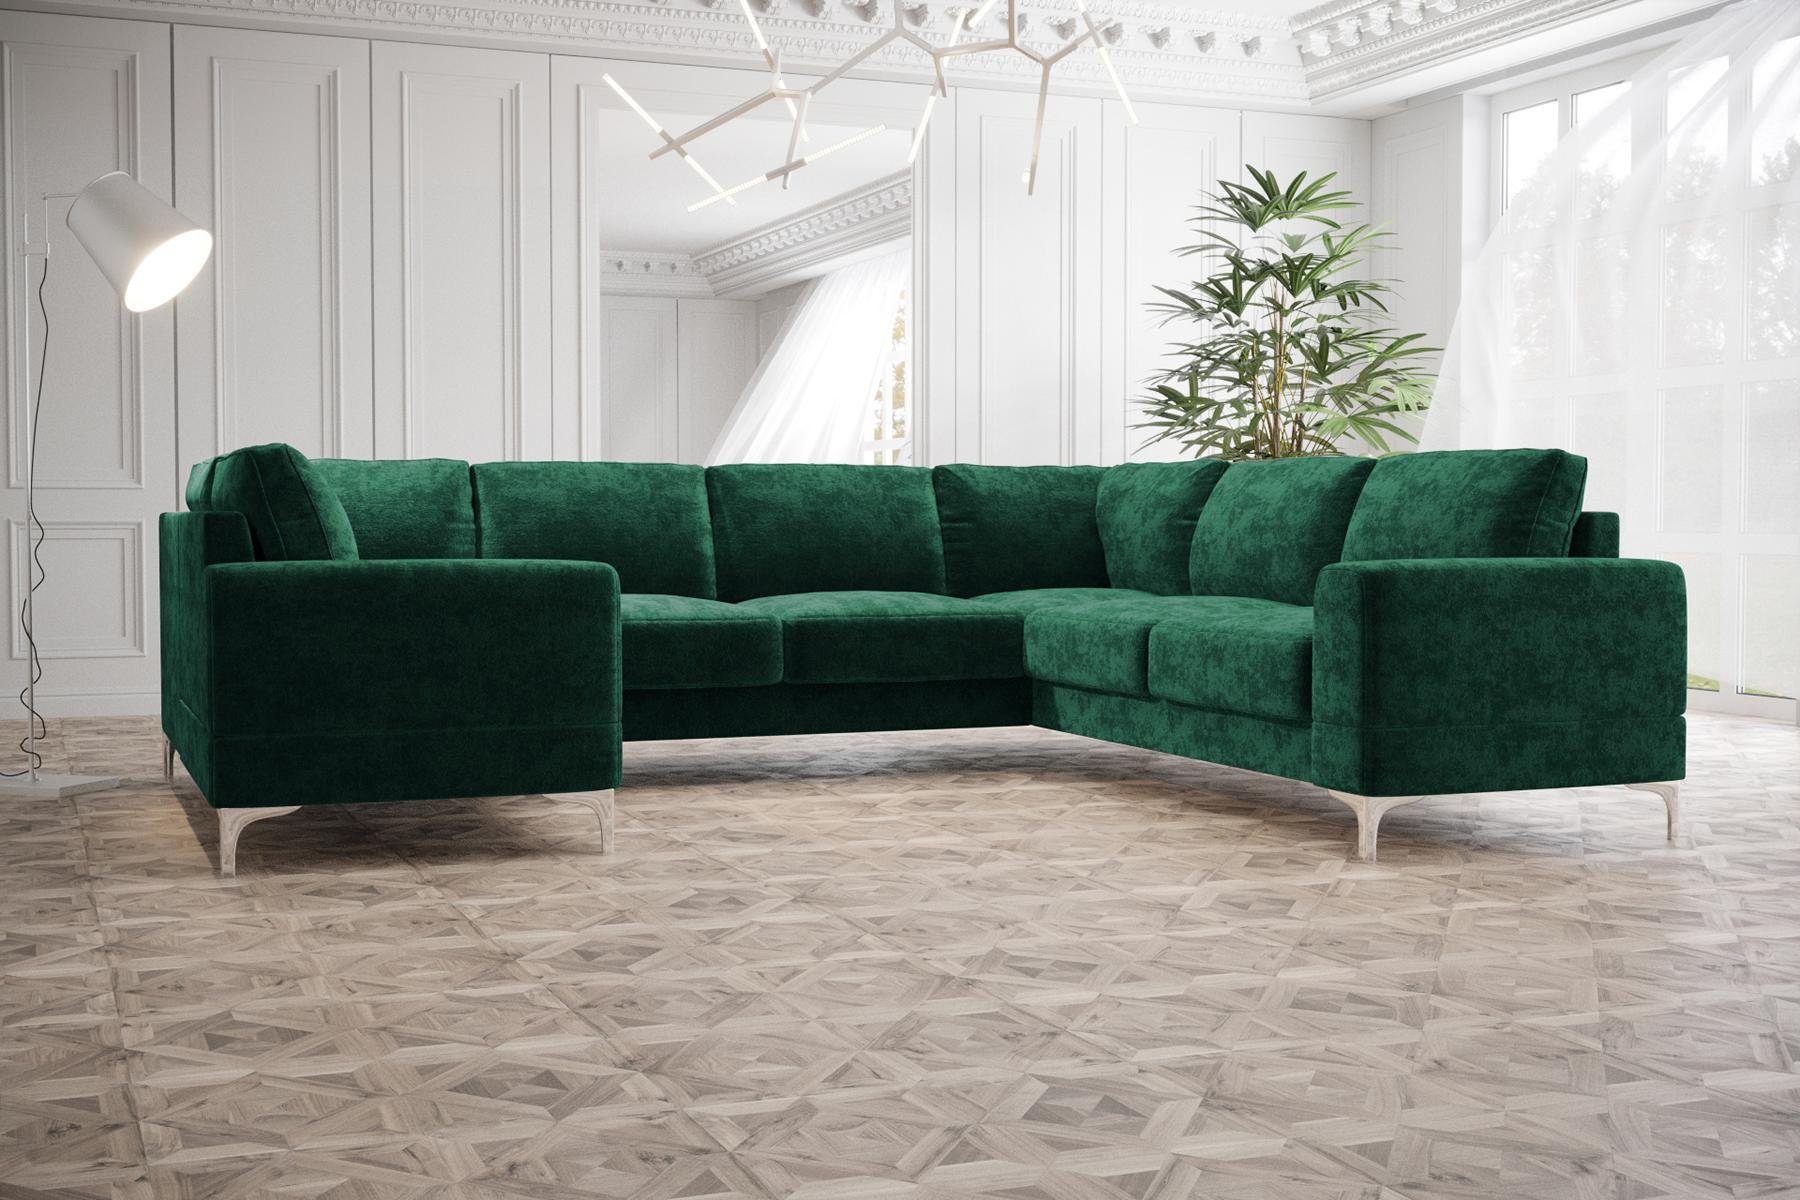 JVmoebel Ecksofa Wohnlandschaft Polsterecke Sofa Couch Sofas Neu, Made in Europe Grün